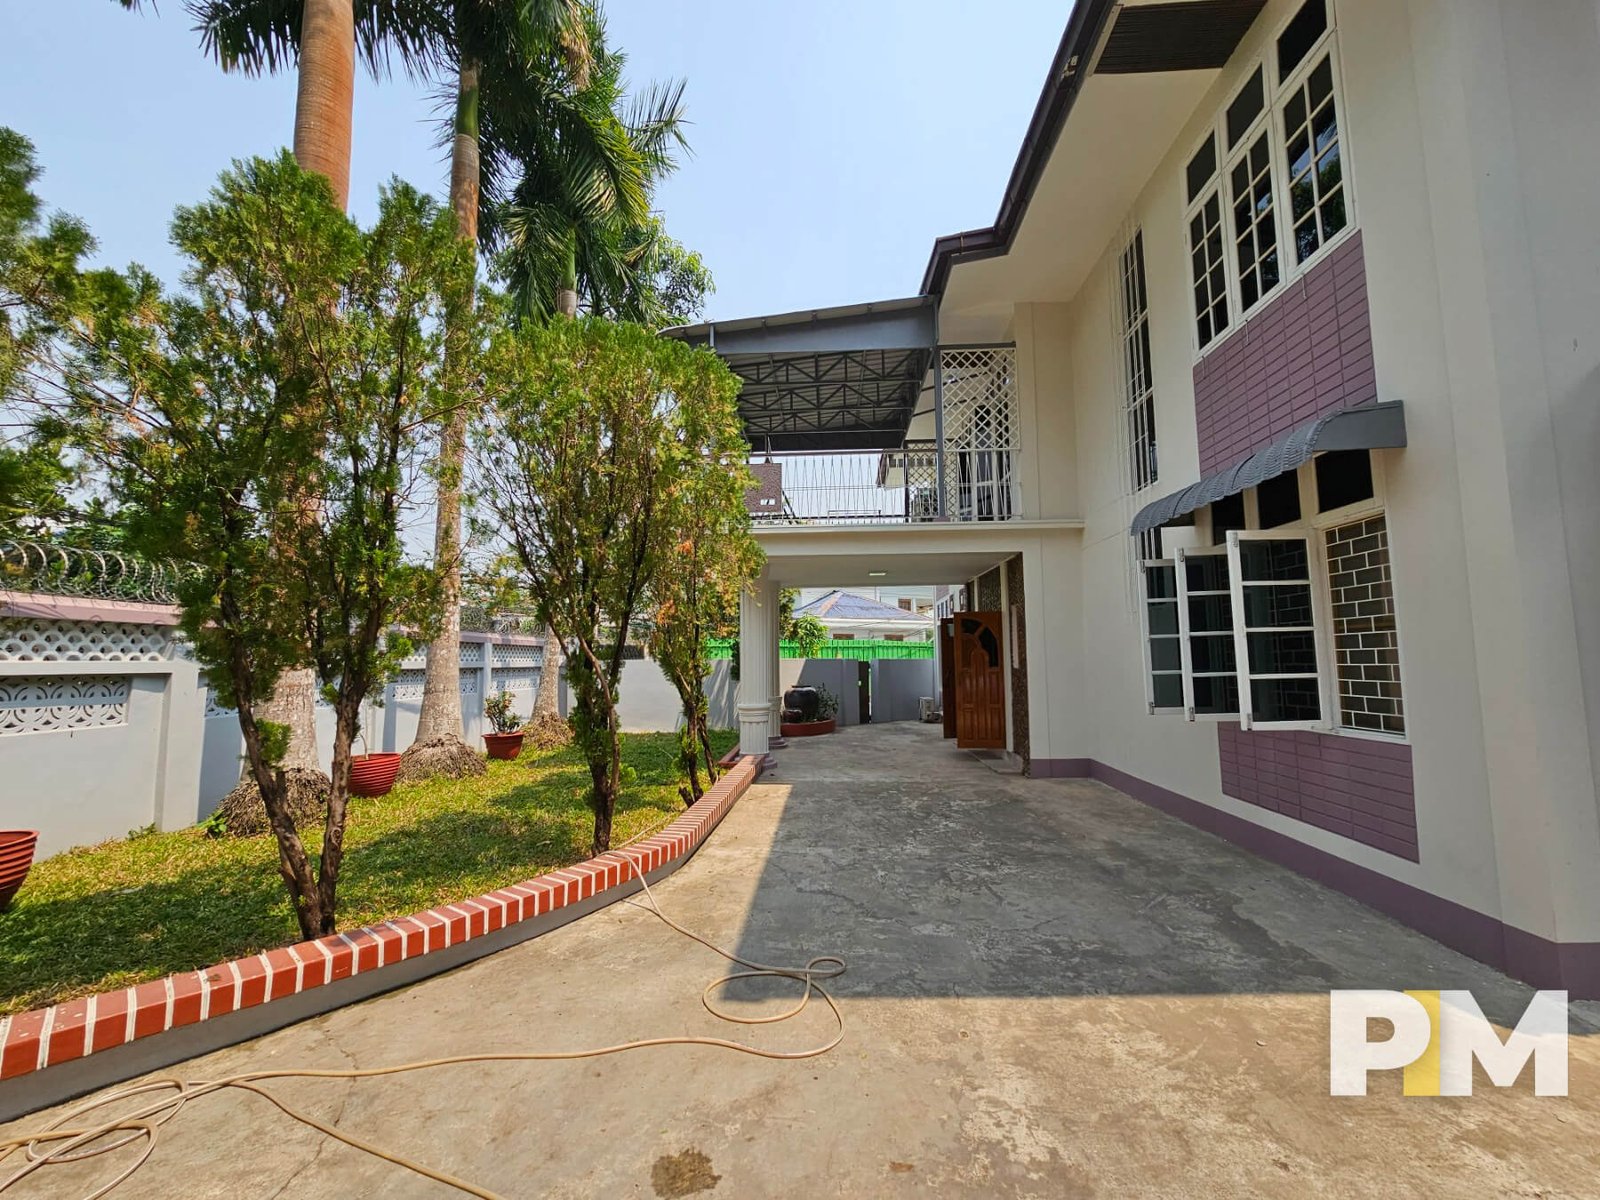 Porch - Myanmar Real Estate